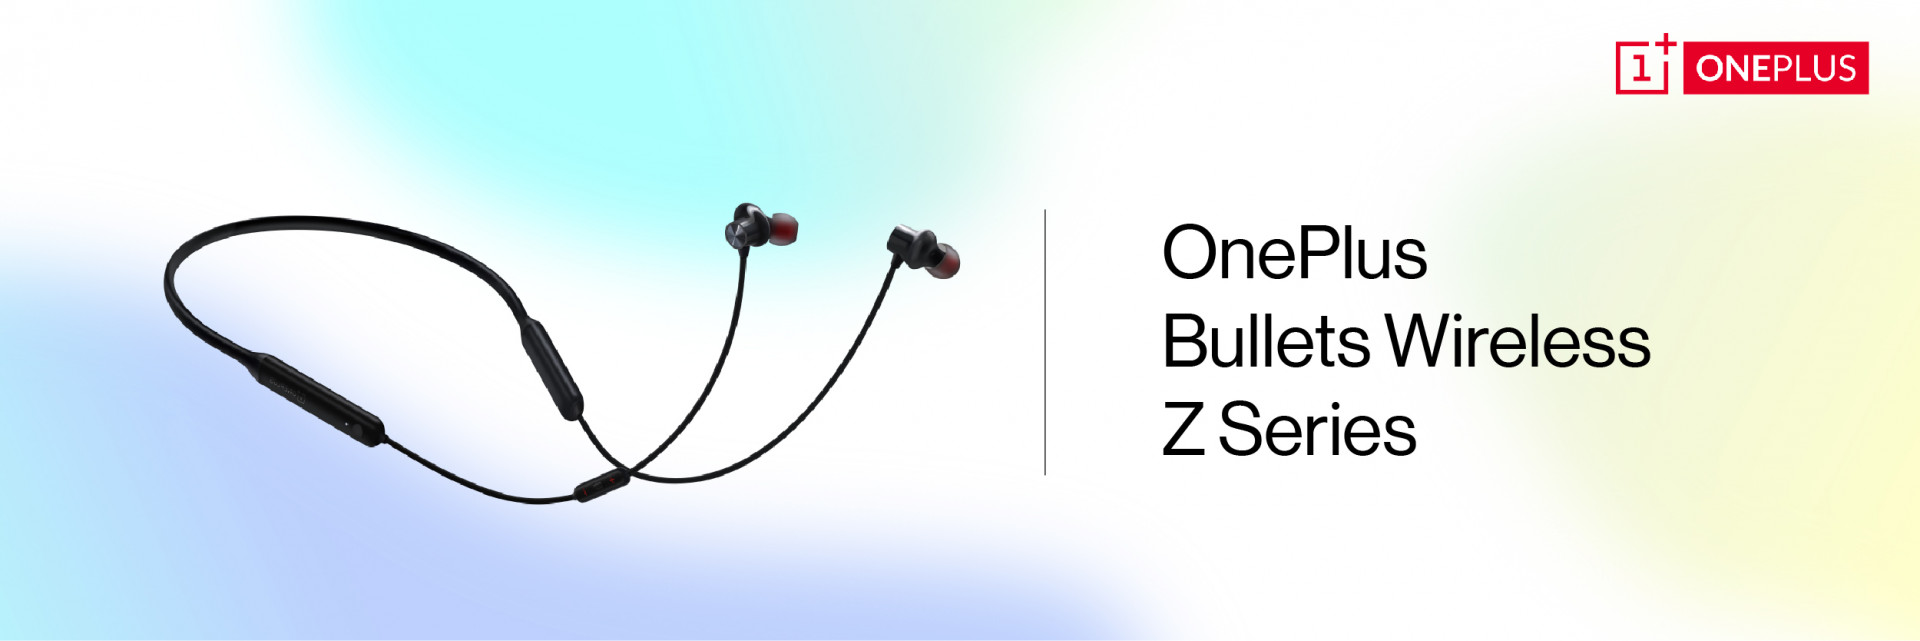 Oneplus Bullets Wireless Z Series